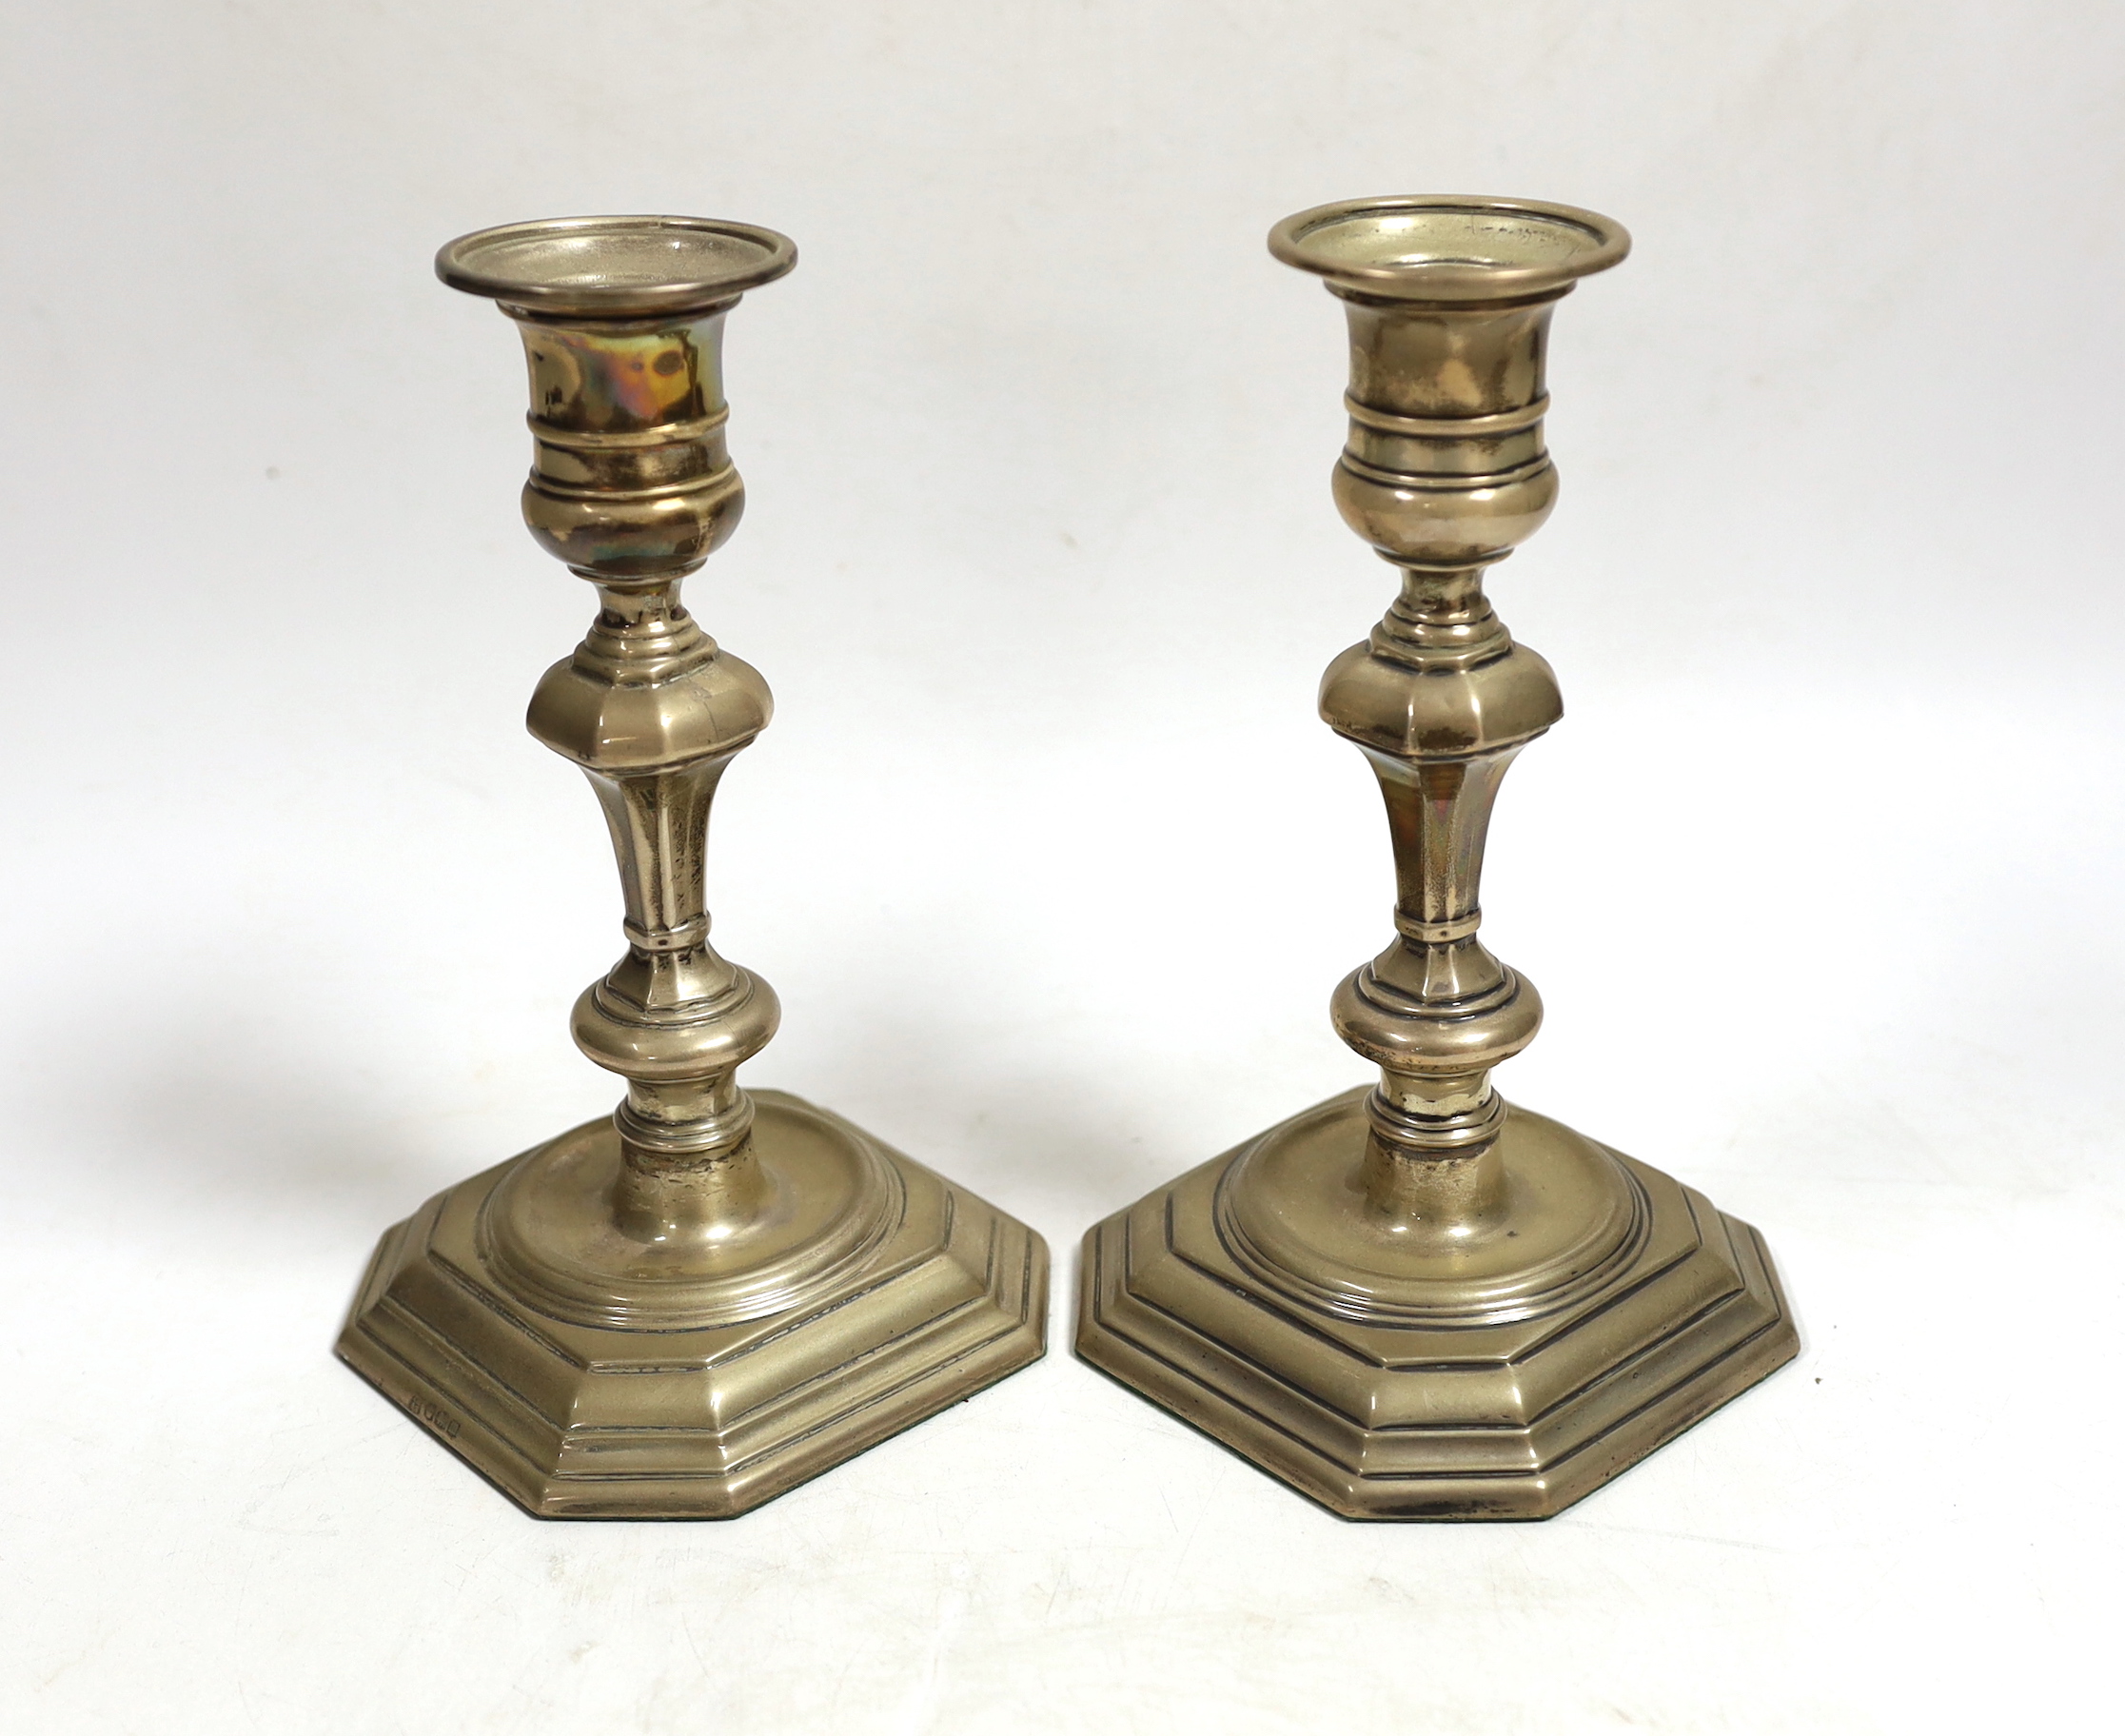 A pair of Edwardian 18th century design candlesticks, by Thomas Bradbury & Sons Ltd, London, 1907, height 17.6cm, weighted.